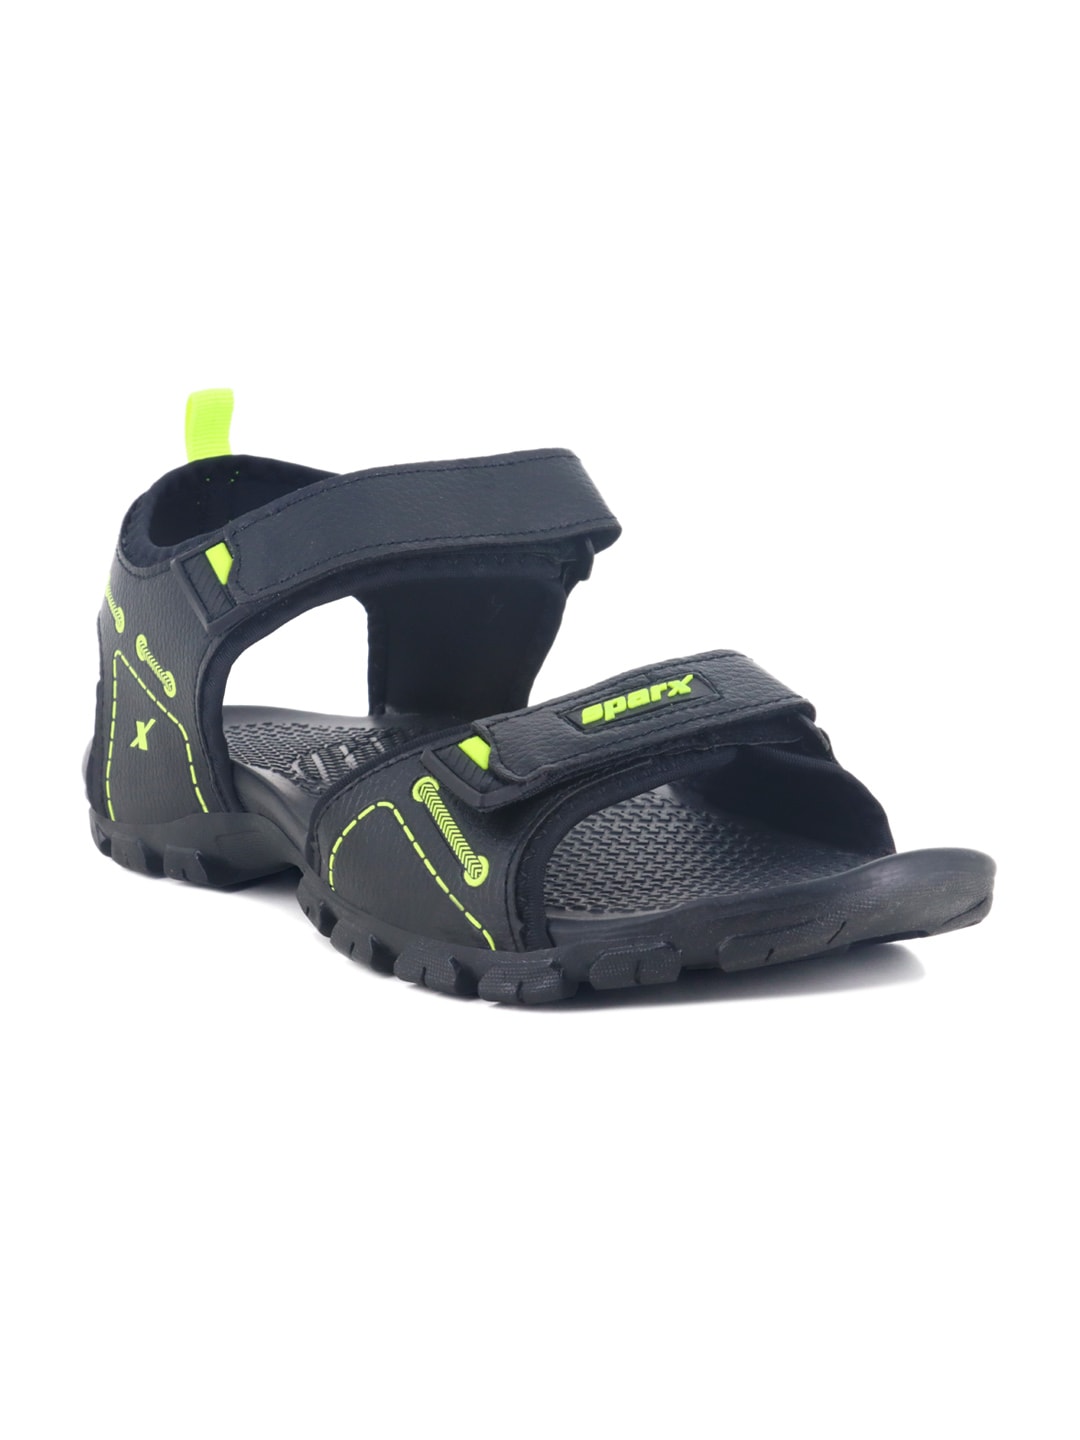 Sparx Black Floater Sandals Hot Sale - www.falconbreeding.eu 1688955847